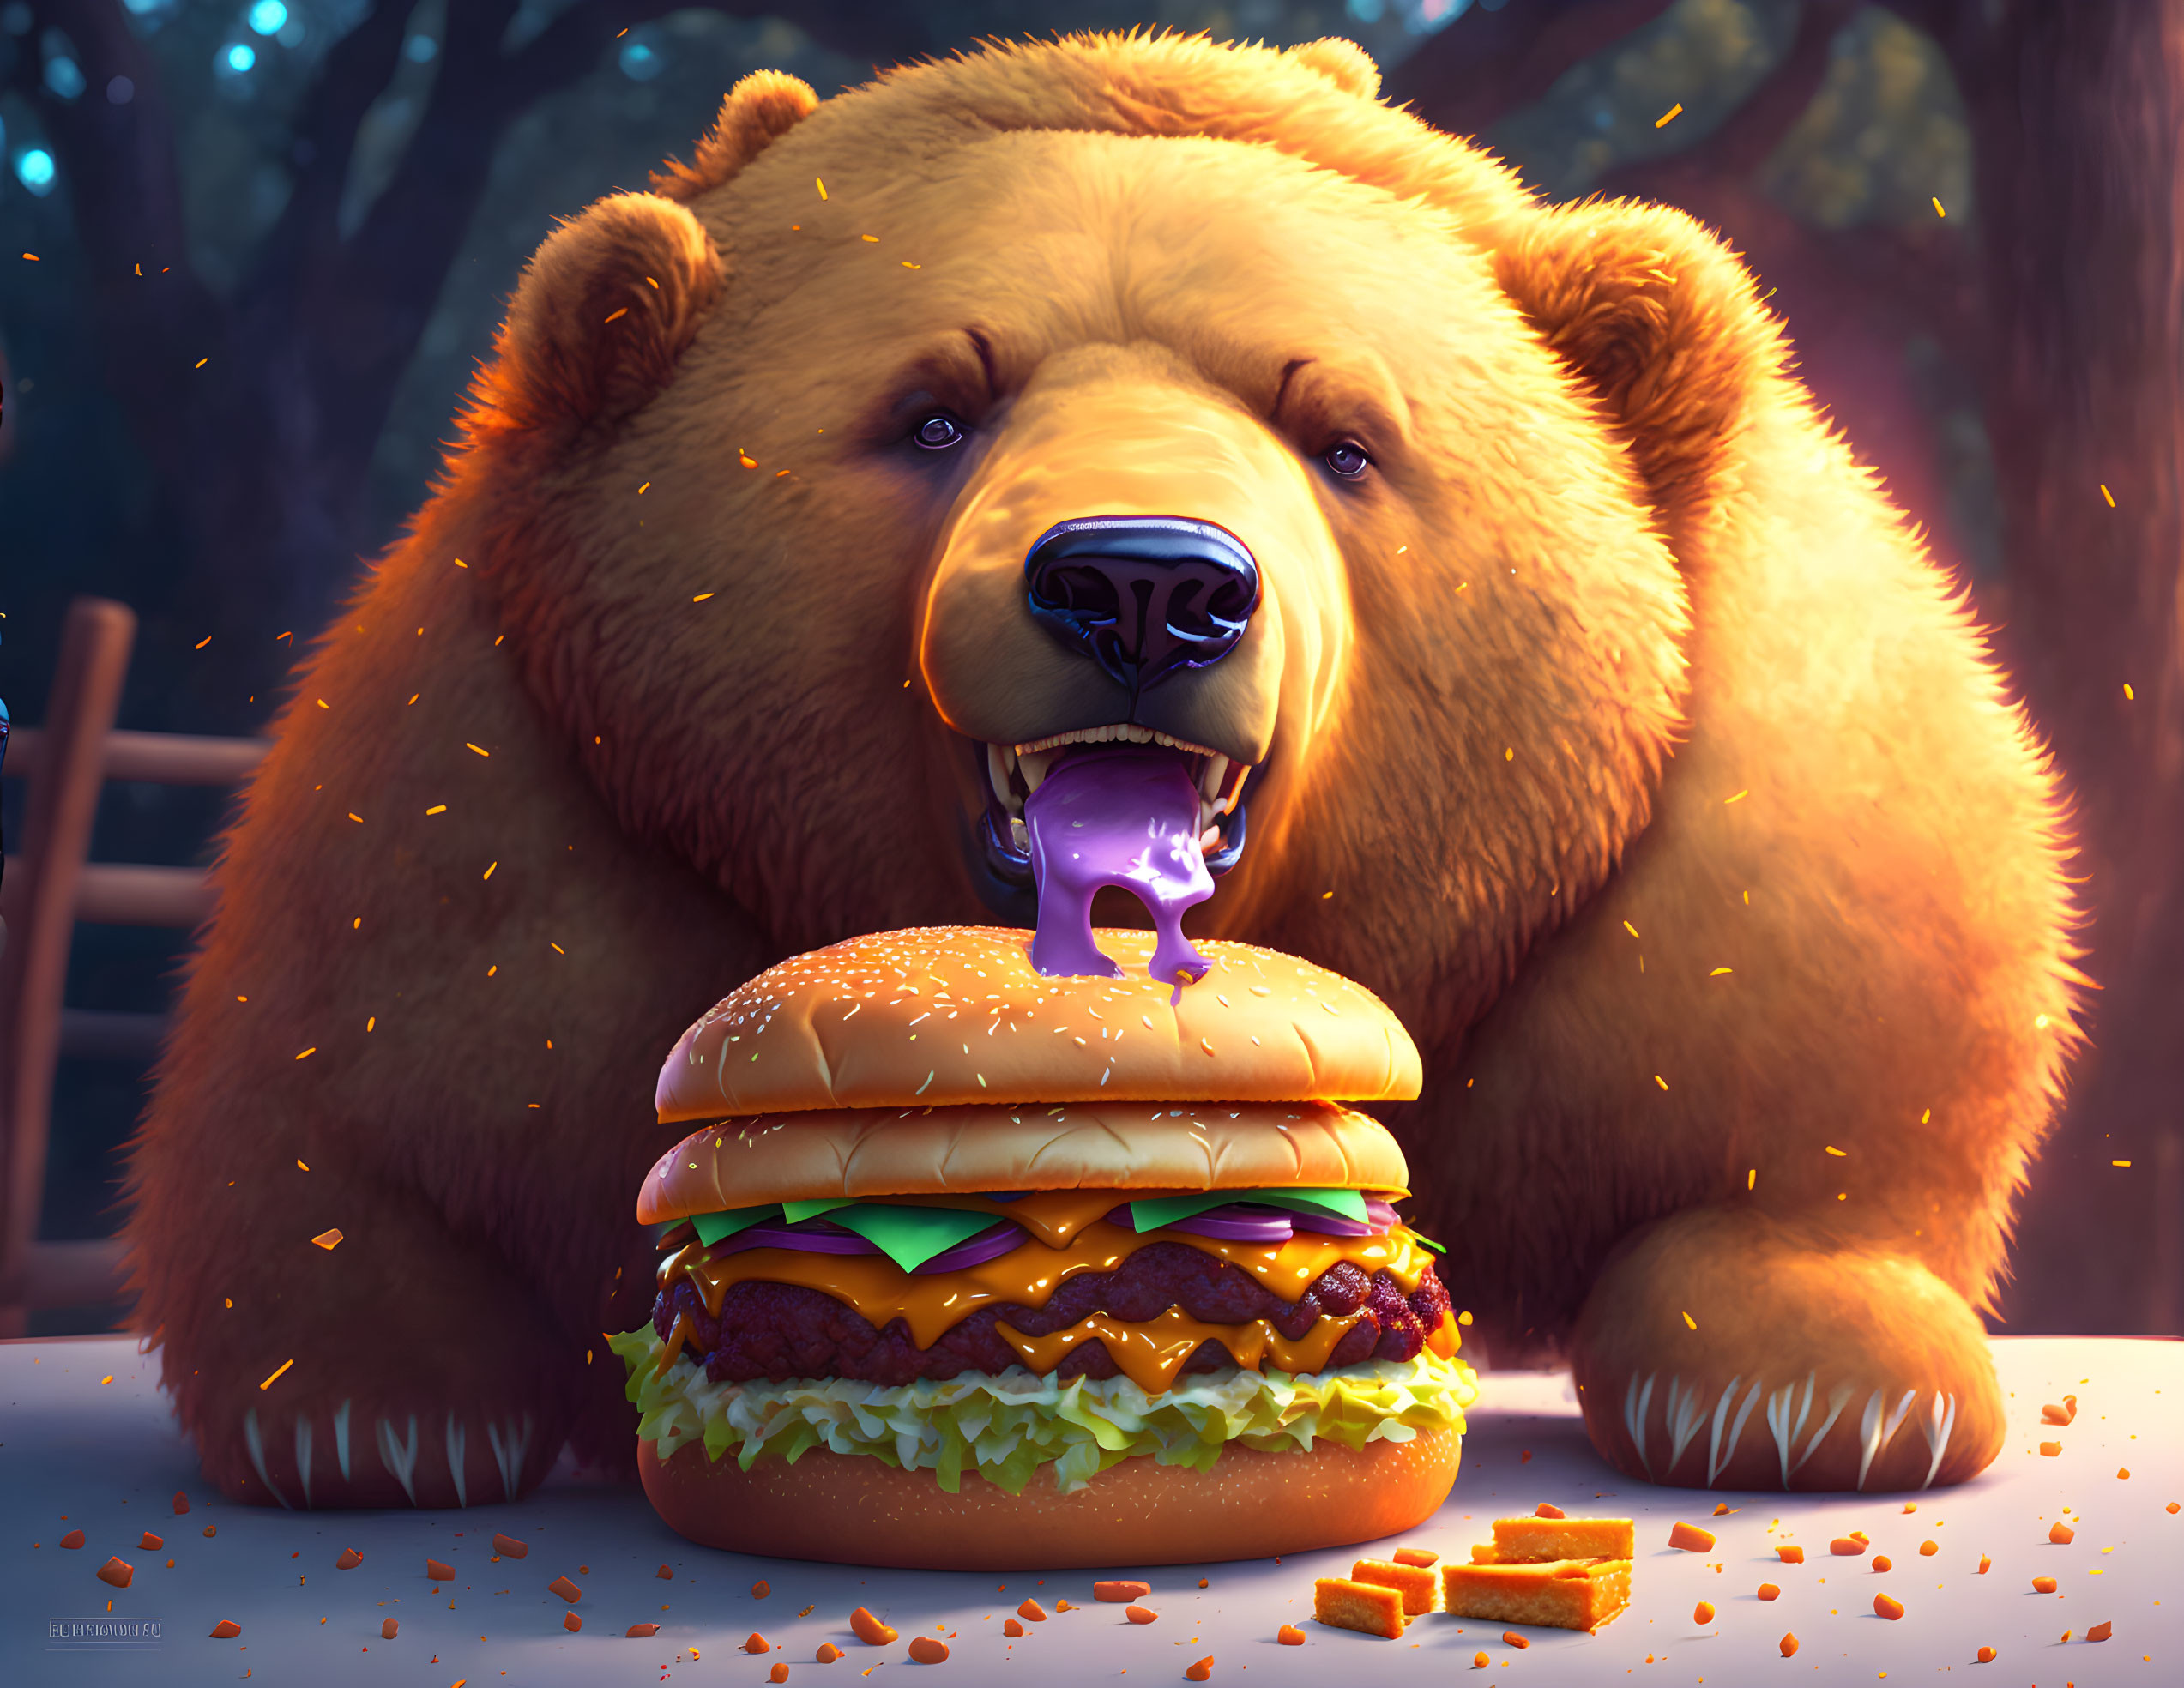 The Bear & the Burger (dedicated to  ©️TheBear) 